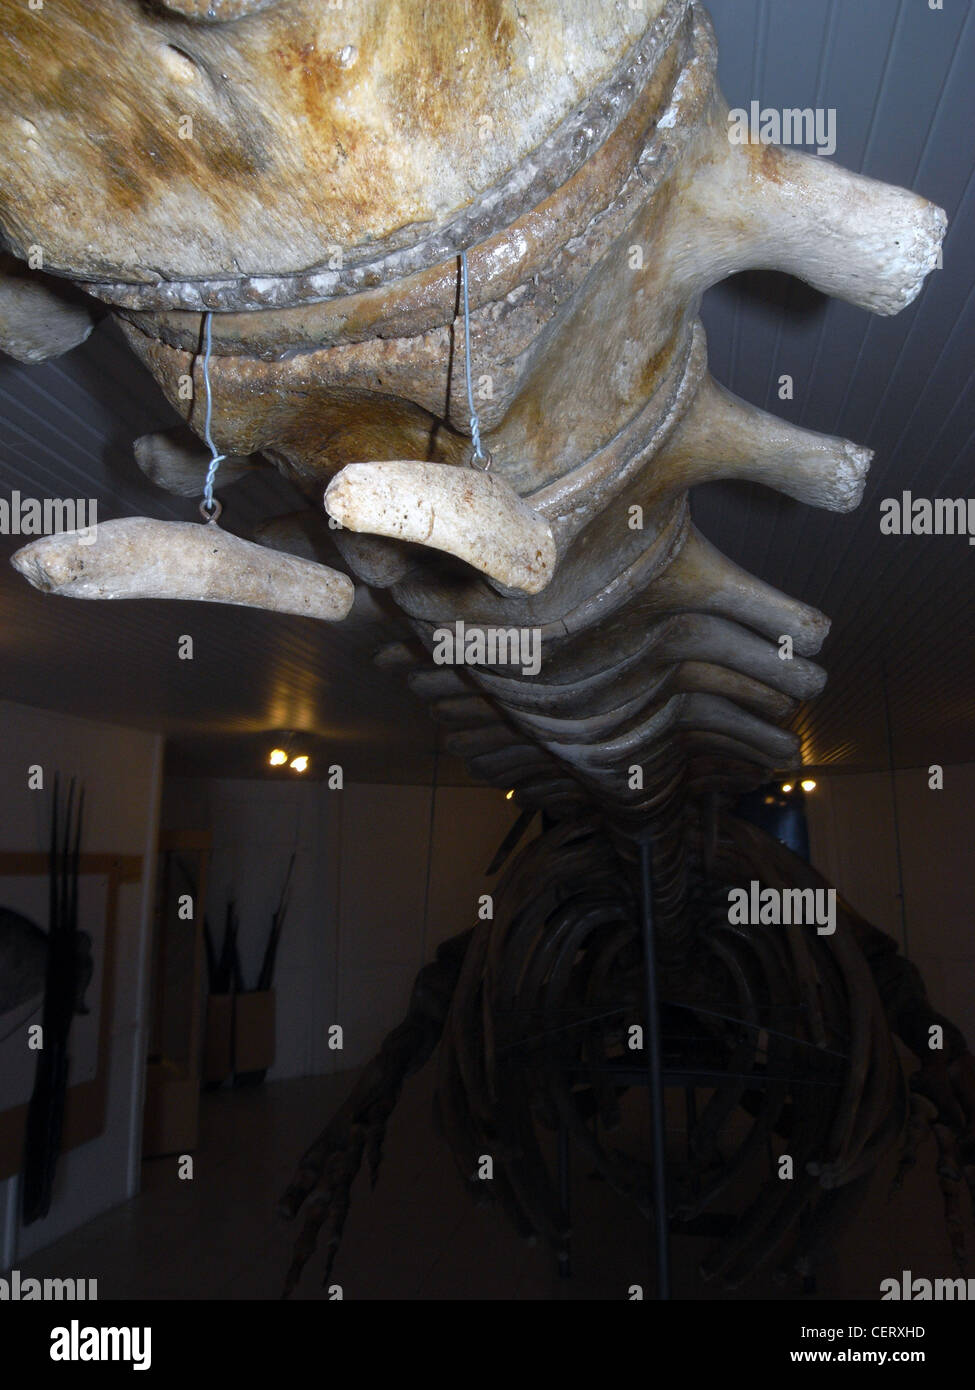 Vestigial hind limb bones hanging underneath spine, in museum skeleton of southern right whale (Eubalaena australis) Stock Photo